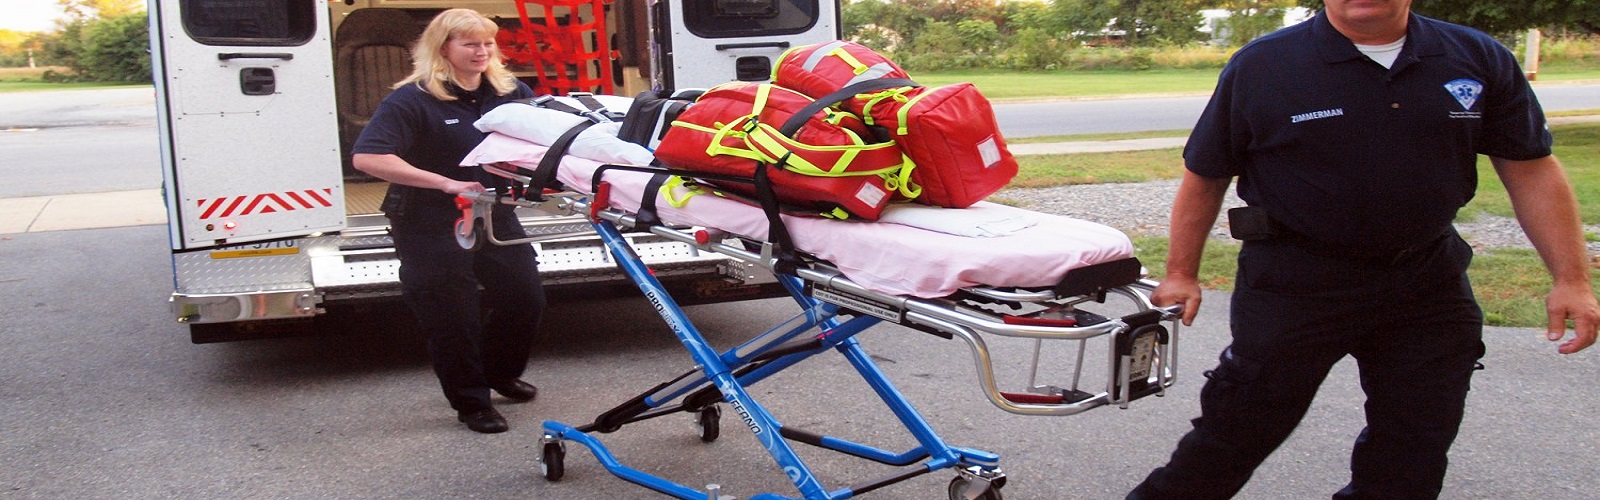 Emergency Medical Equipment & supplies